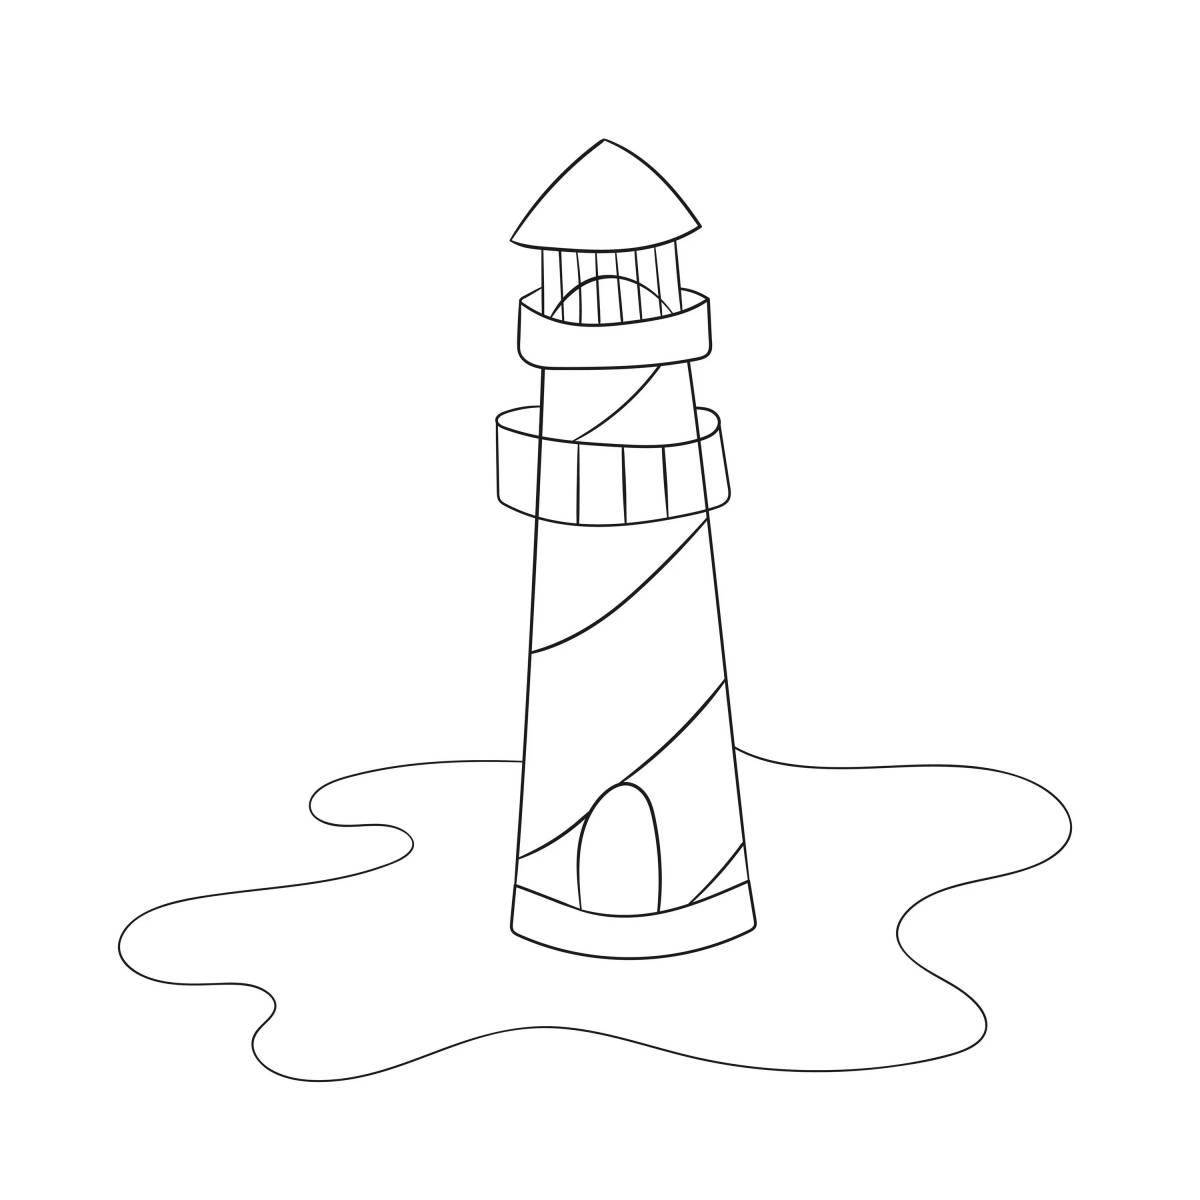 Violent lighthouse coloring book for kids